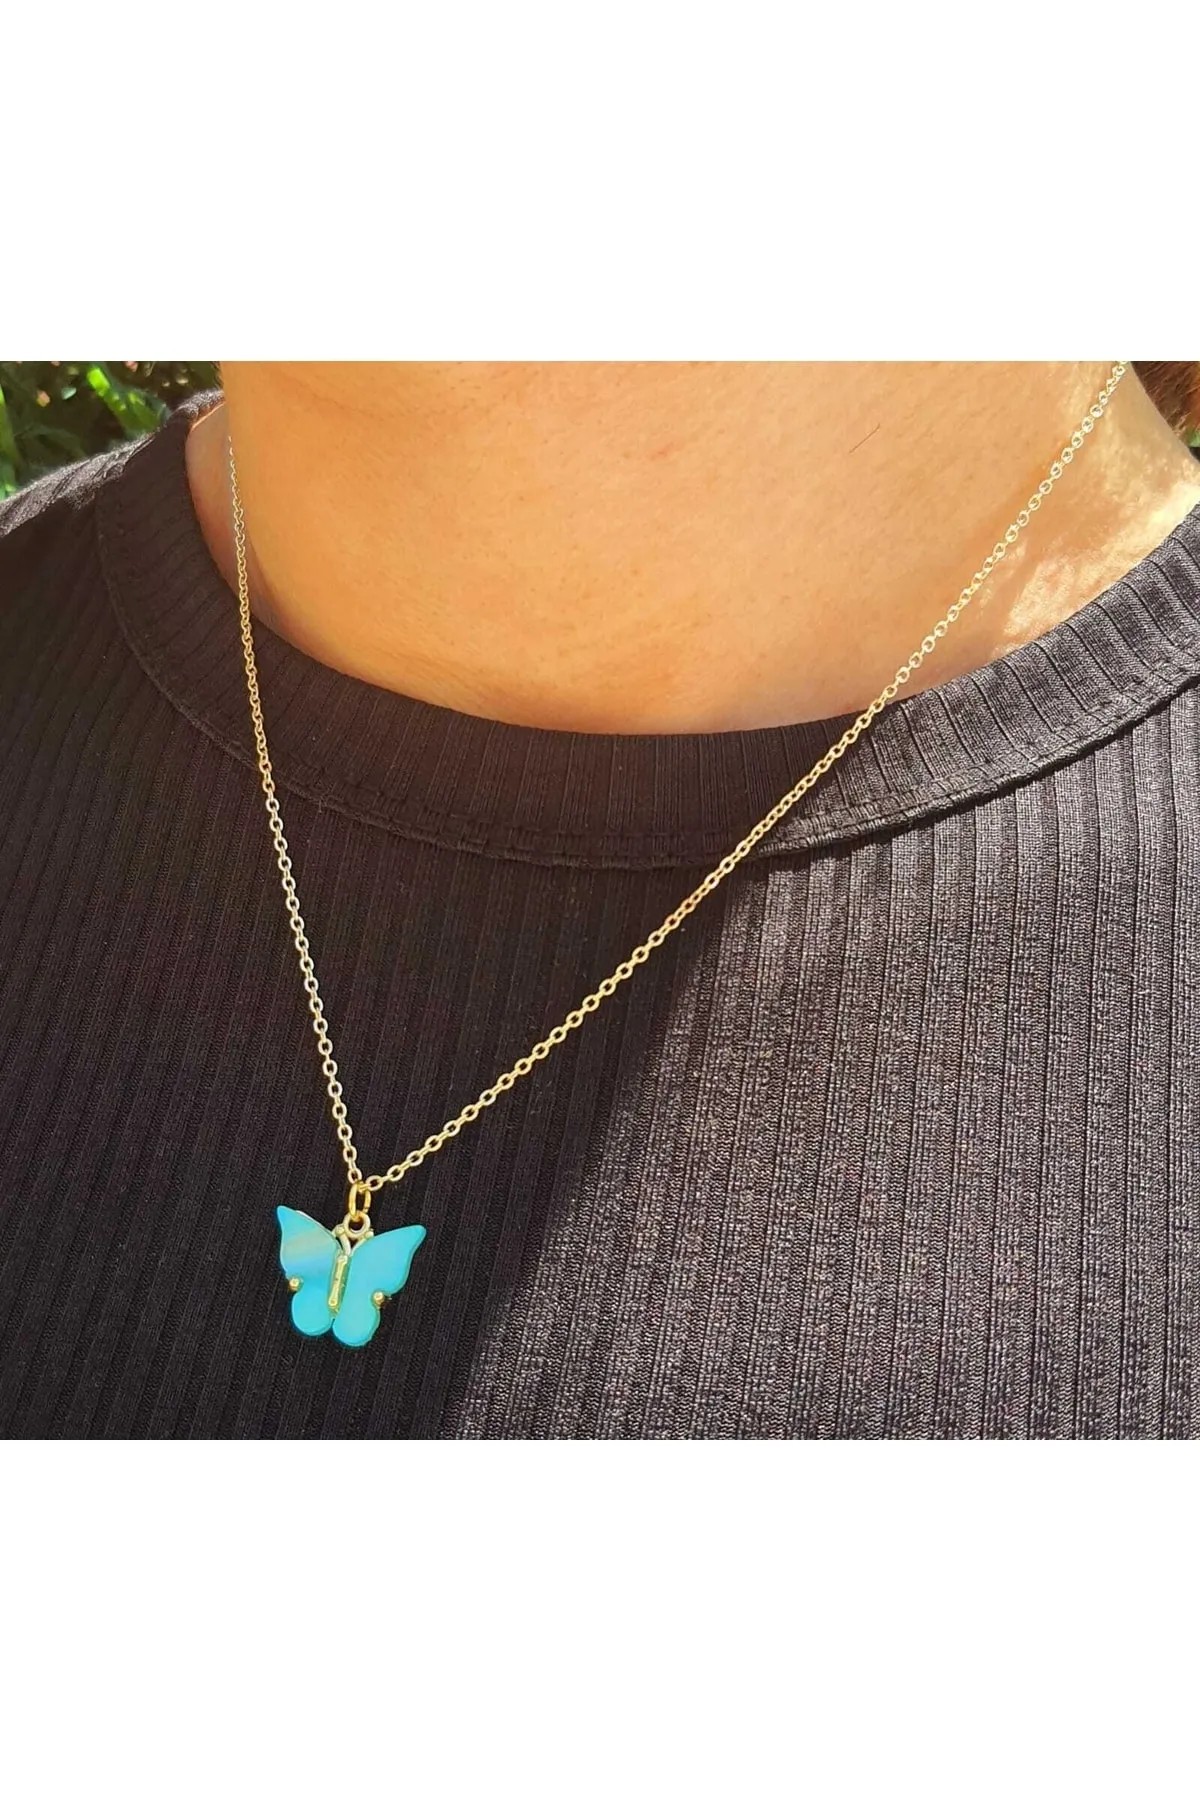 Butterfly necklace - blue